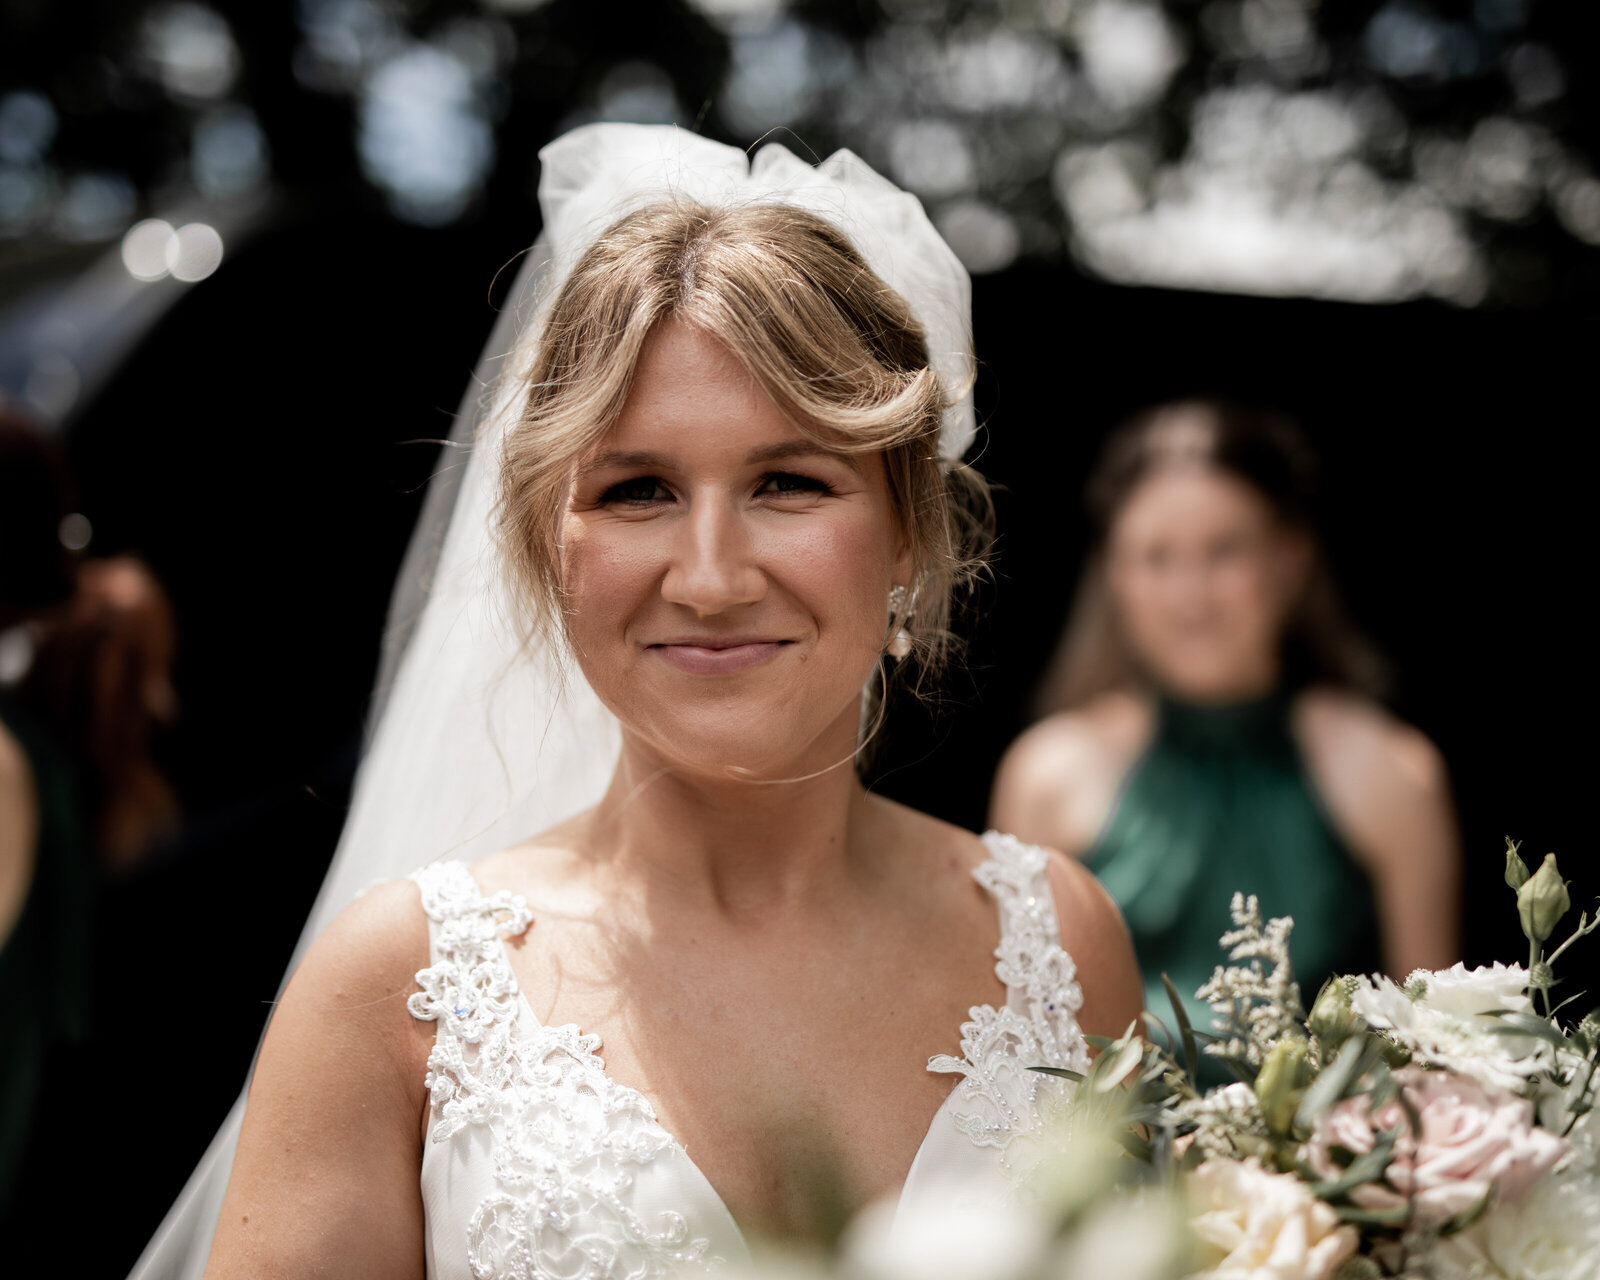 Rosie-Tom-Rexvil-Photography-Adelaide-Wedding-Photographer-333